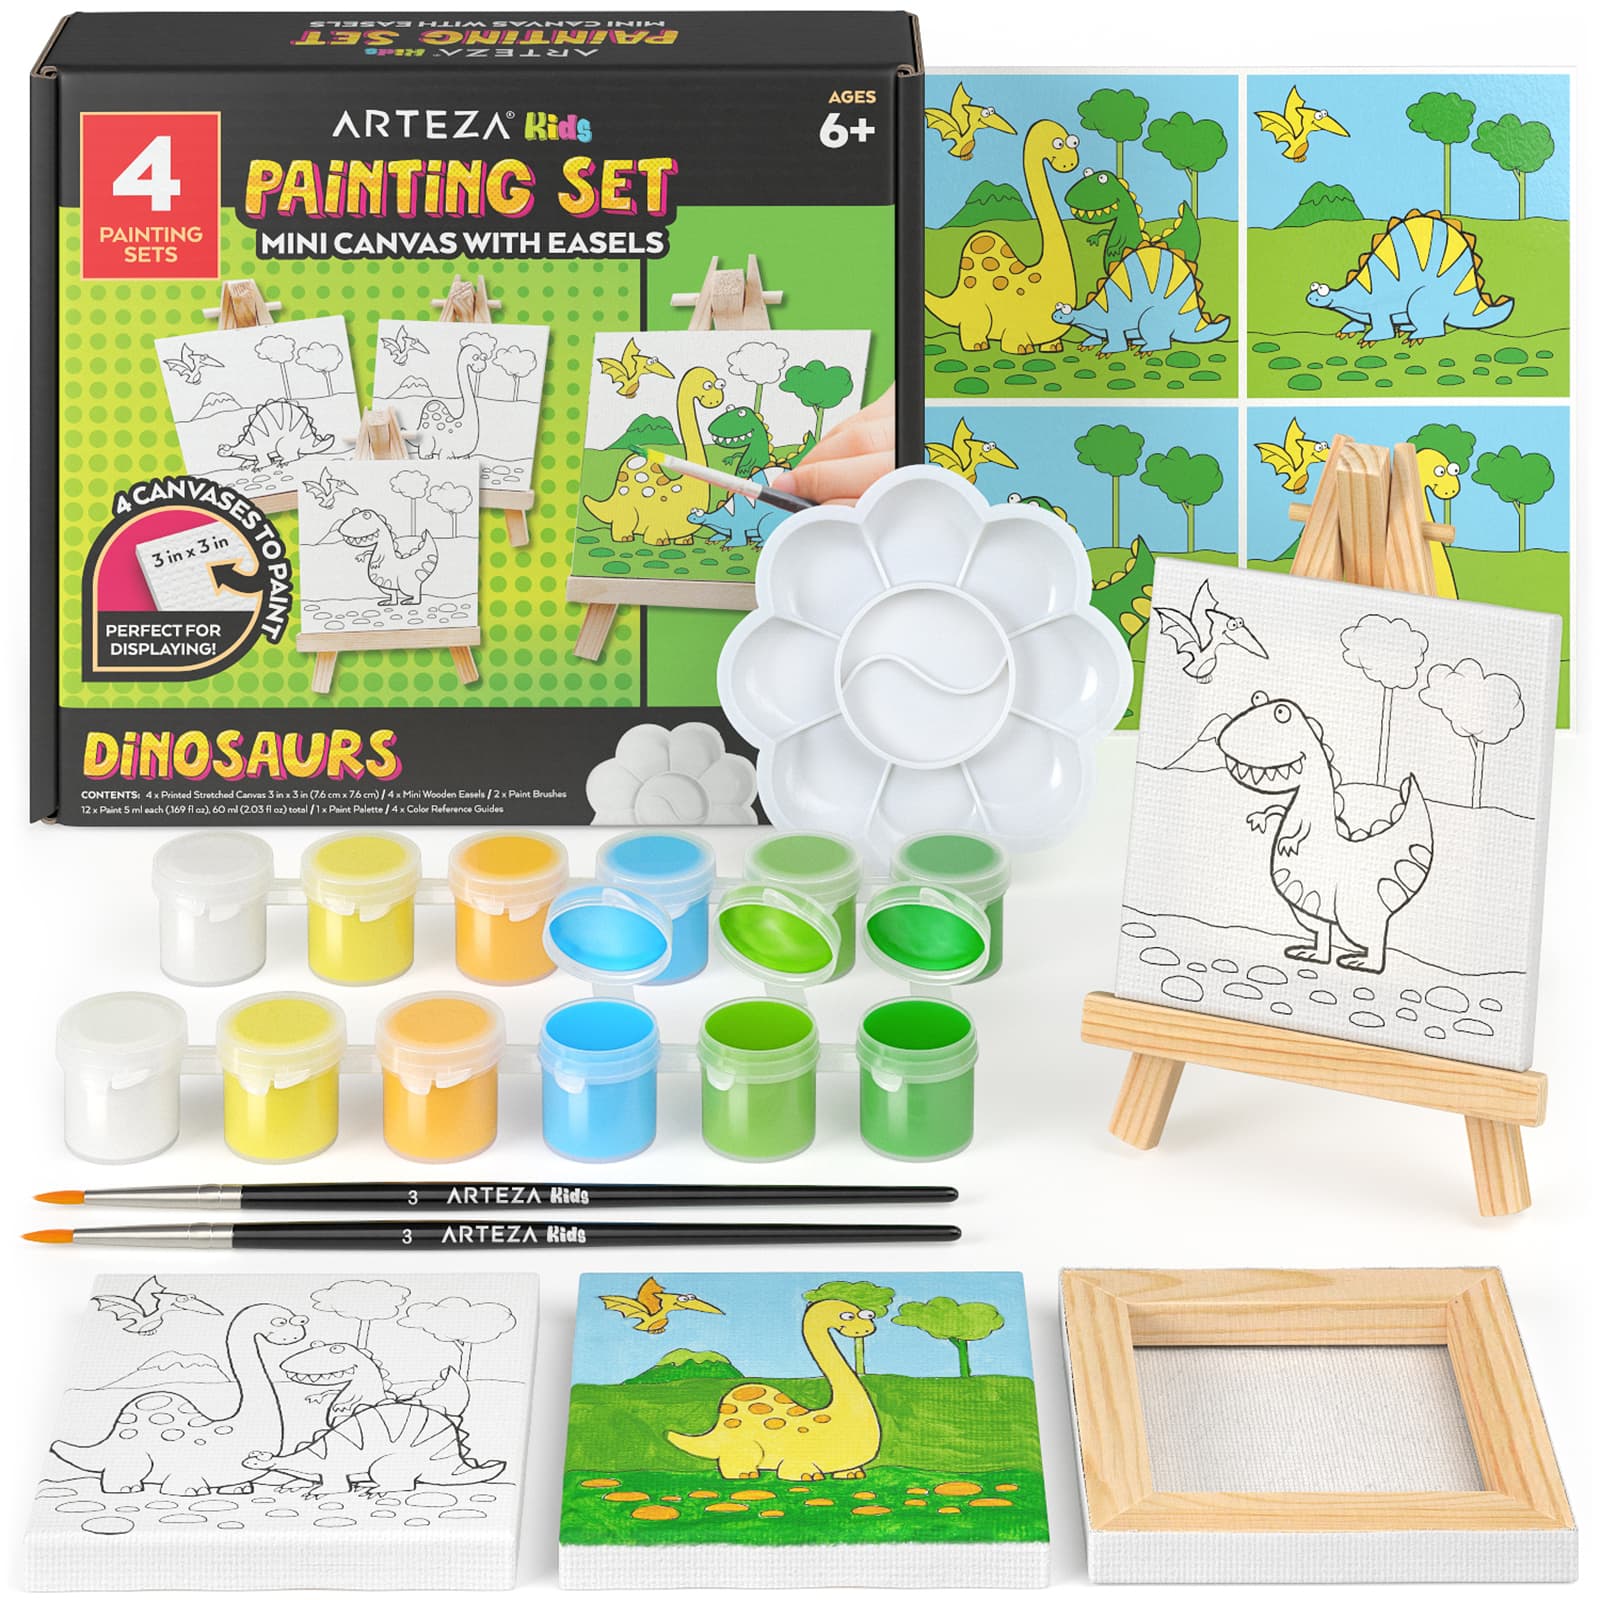 Arteza&#xAE; Kids Canvas Paint Kit, 4 Mini Canvas- 3 x 3 with Easel, Dinosaurs